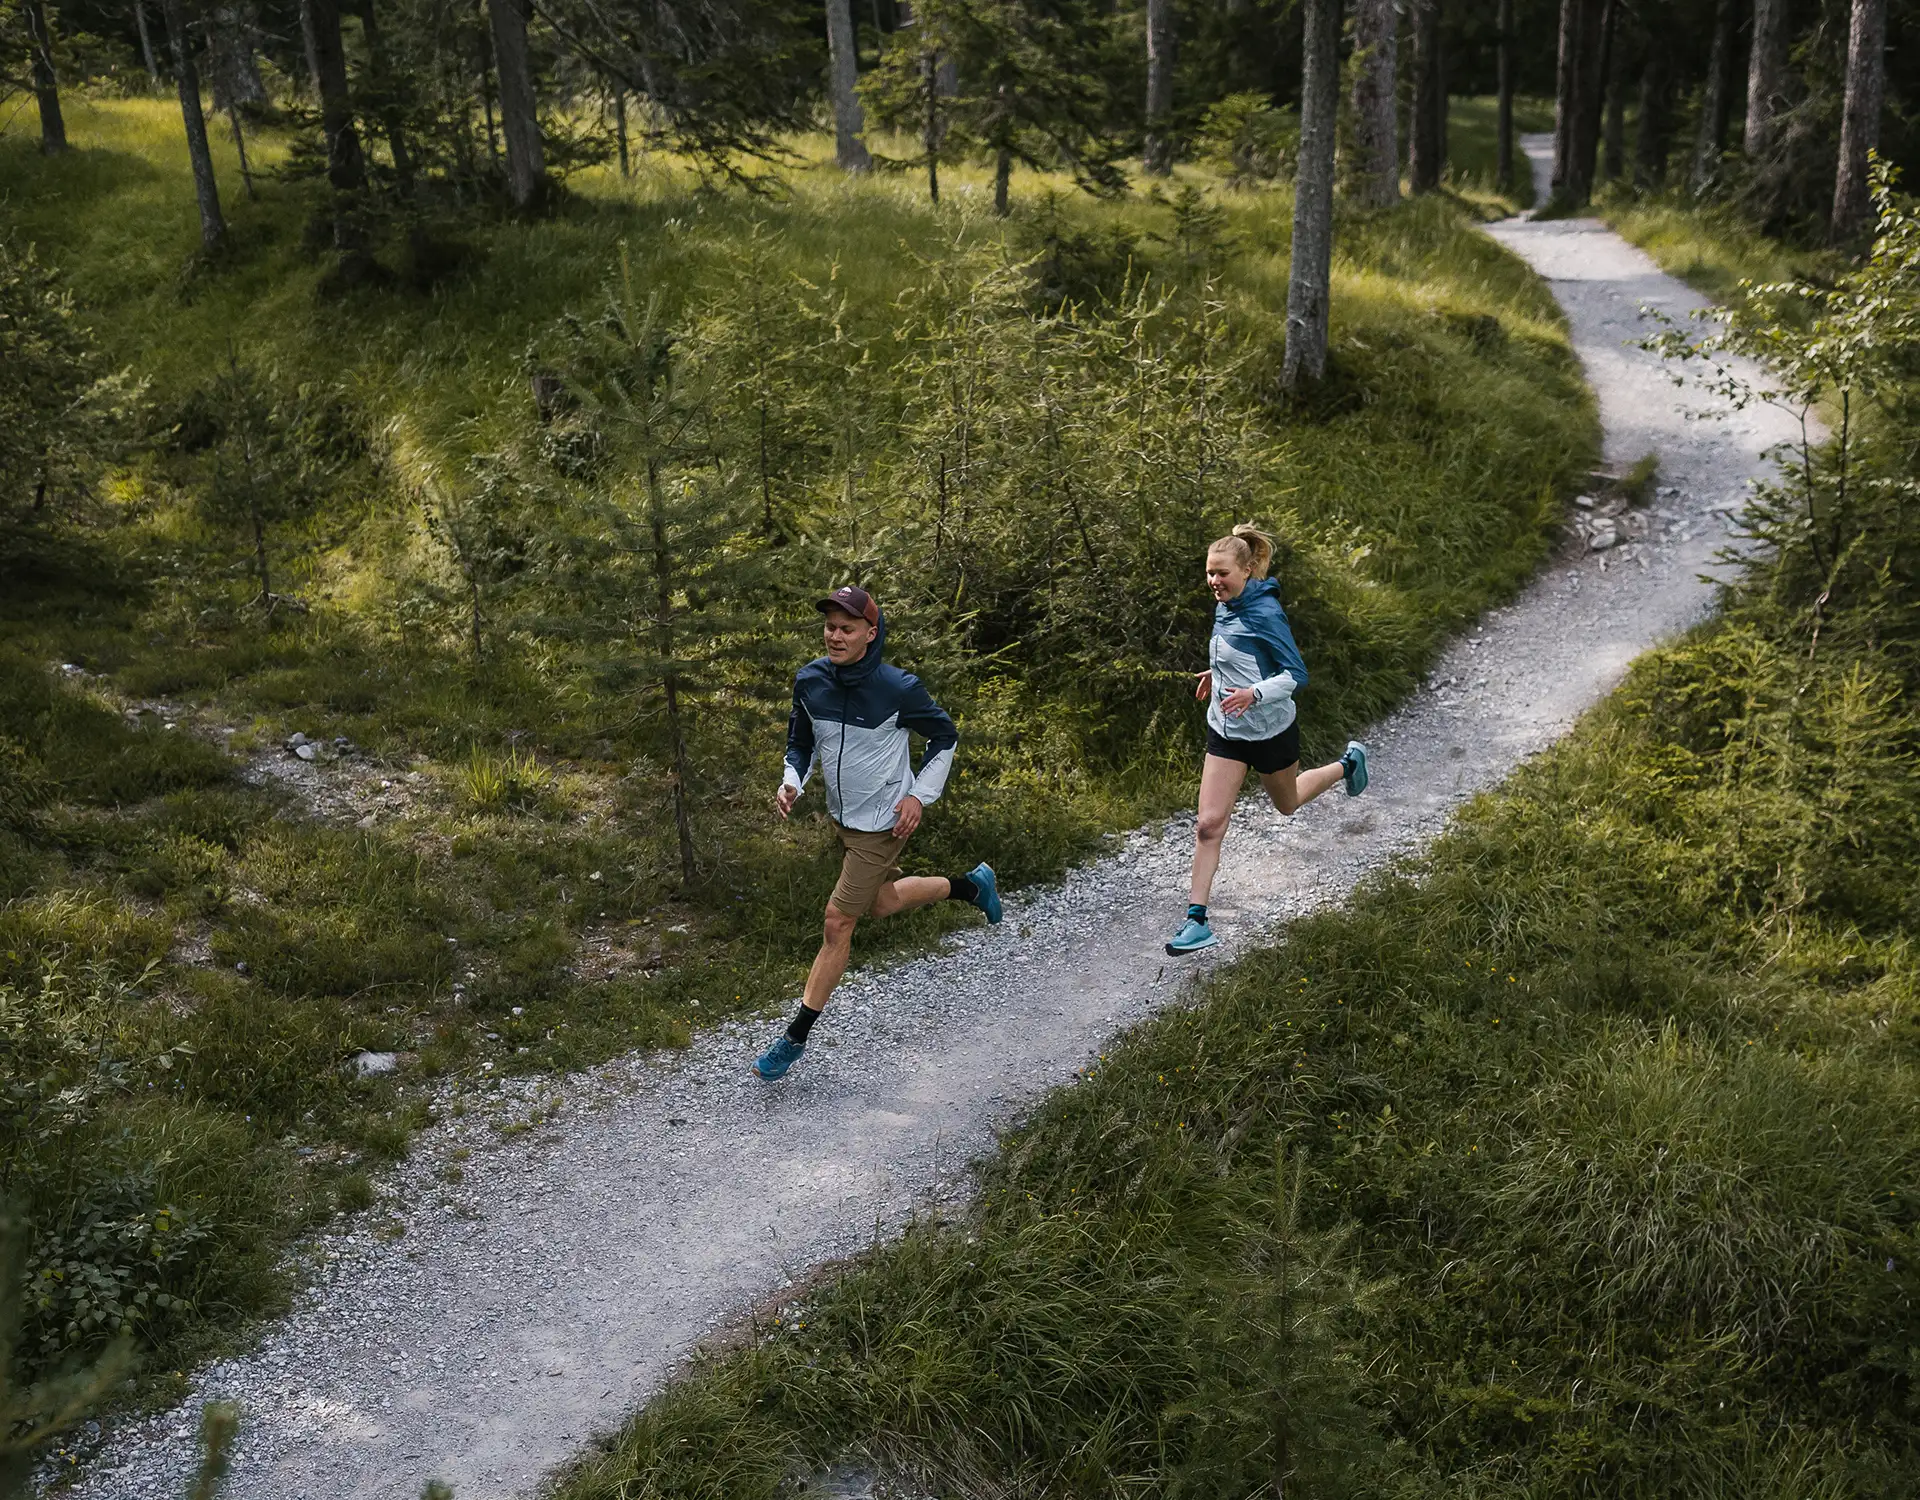 Man & woman running on trail